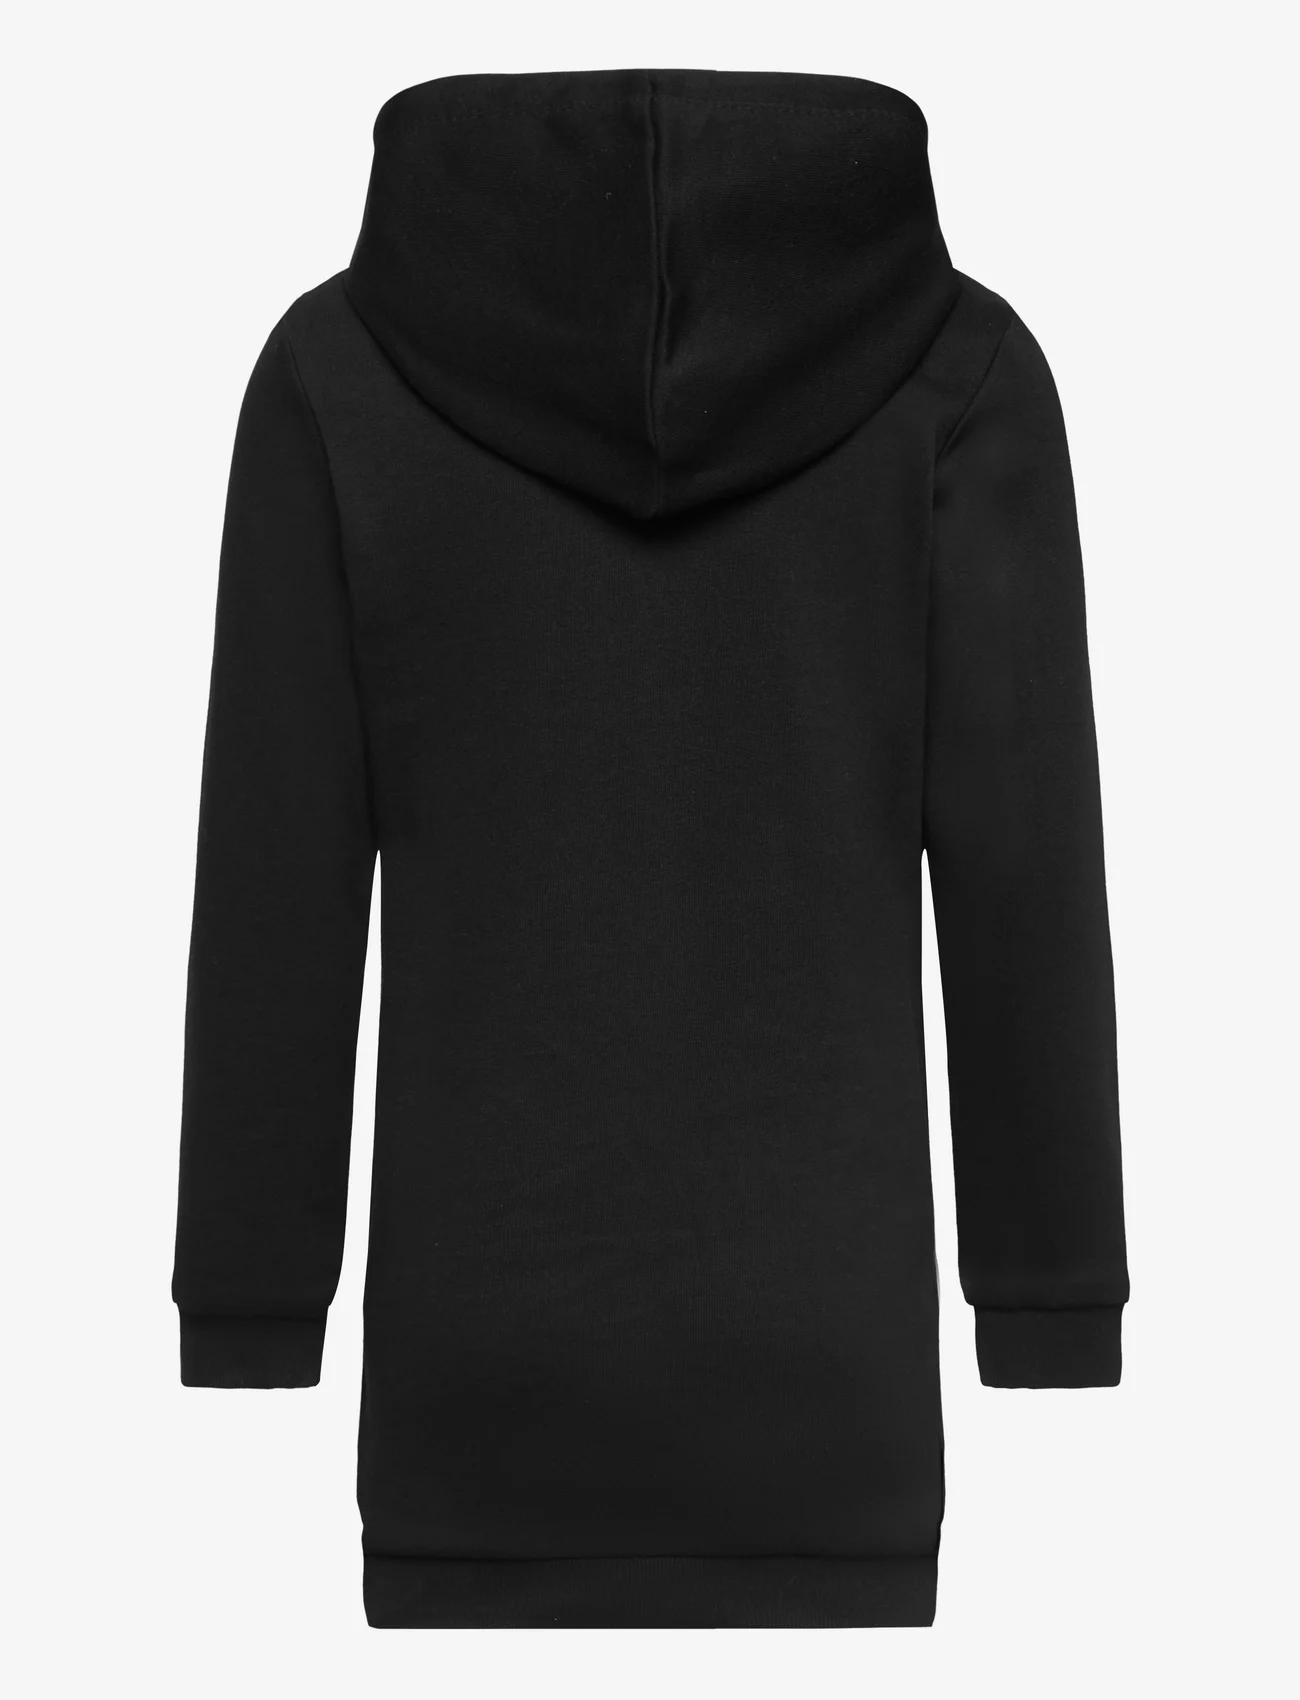 PUMA - Hooded Dress G - long-sleeved casual dresses - puma black - 1